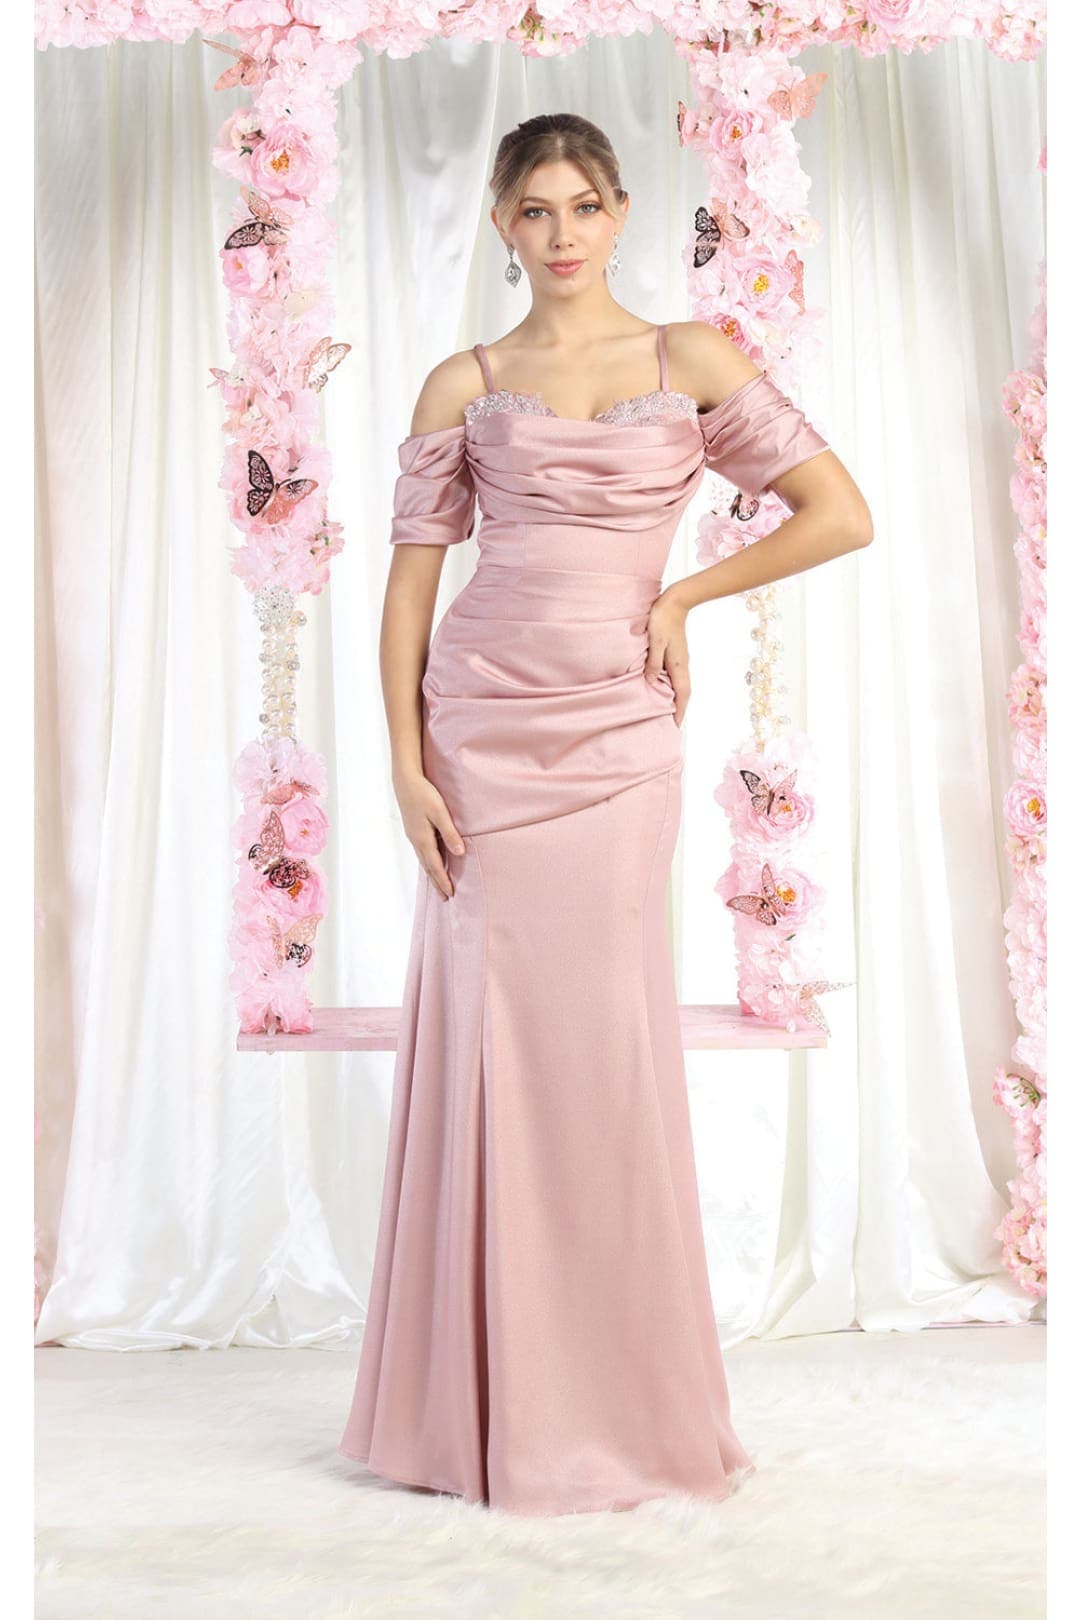 Royal Queen RQ8021 Cold Shoulder Sheath Prom Evening Gown - MAUVE / 4 - Dress